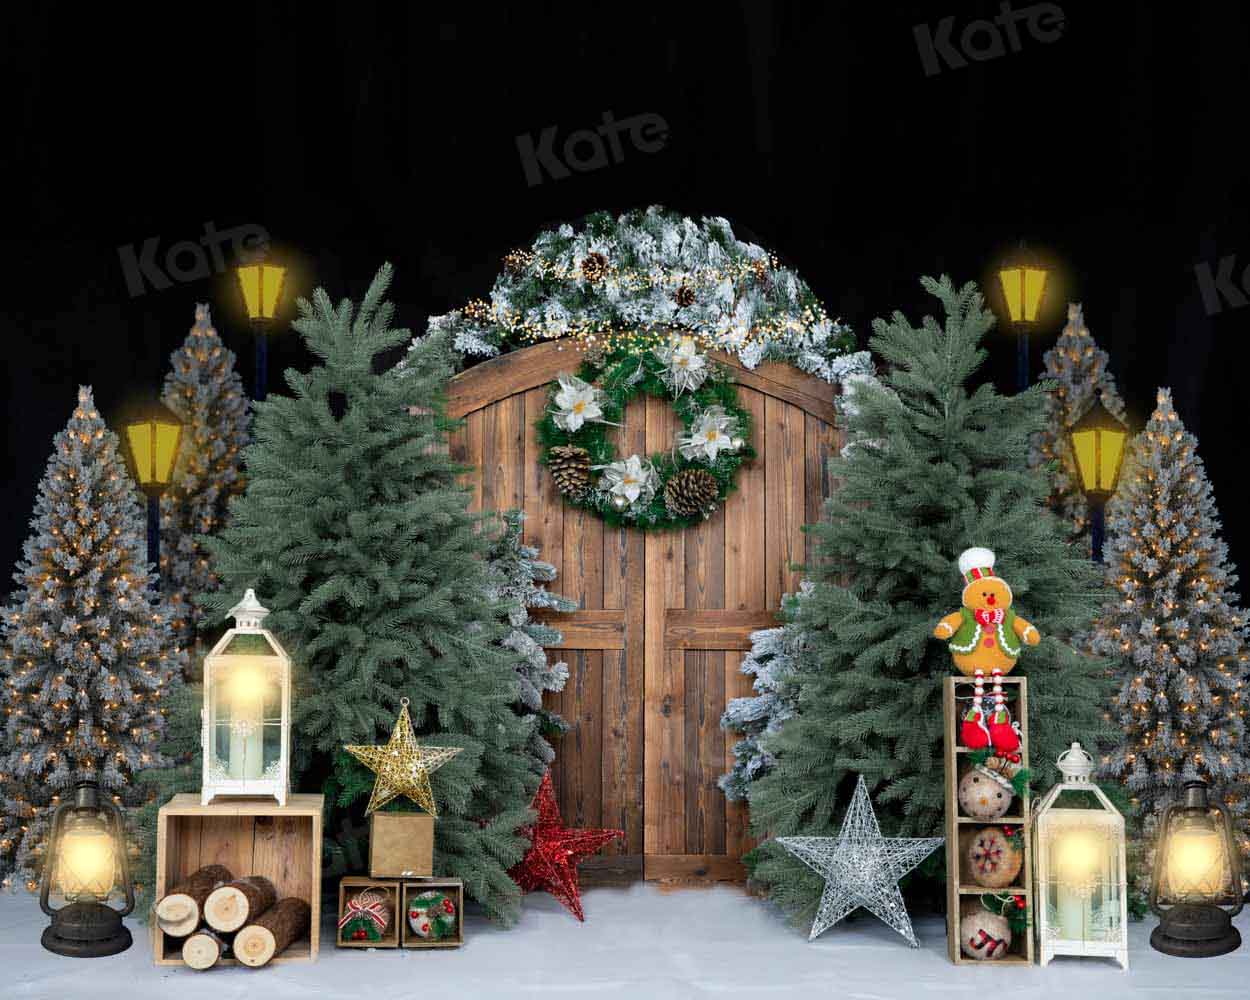 Kate Christmas Trees Backdrop Barn Door Designed by Emetselch